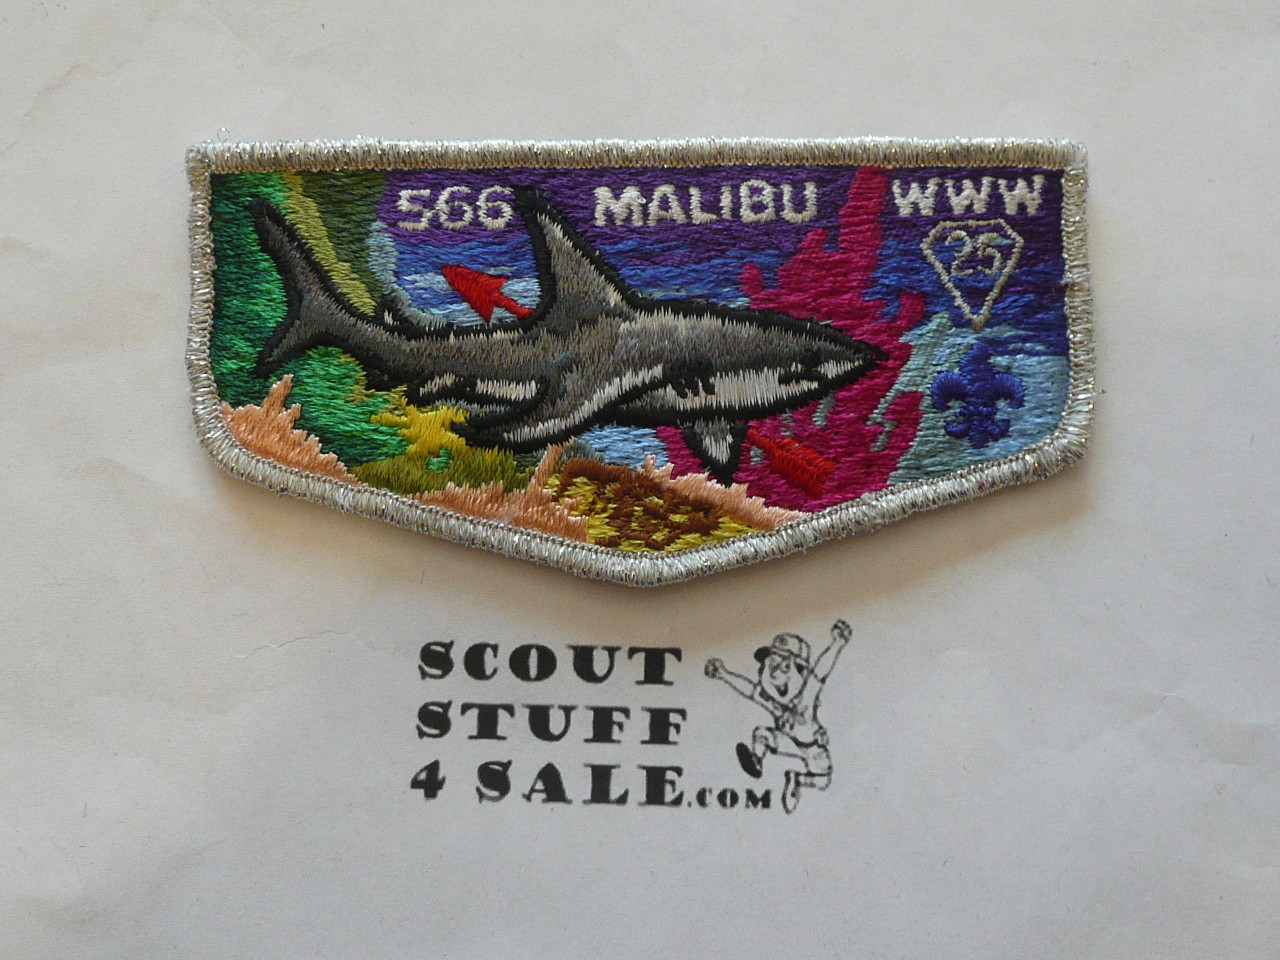 Order of the Arrow Lodge #566 Malibu s12 25th Lodge Anniversary Flap Patch